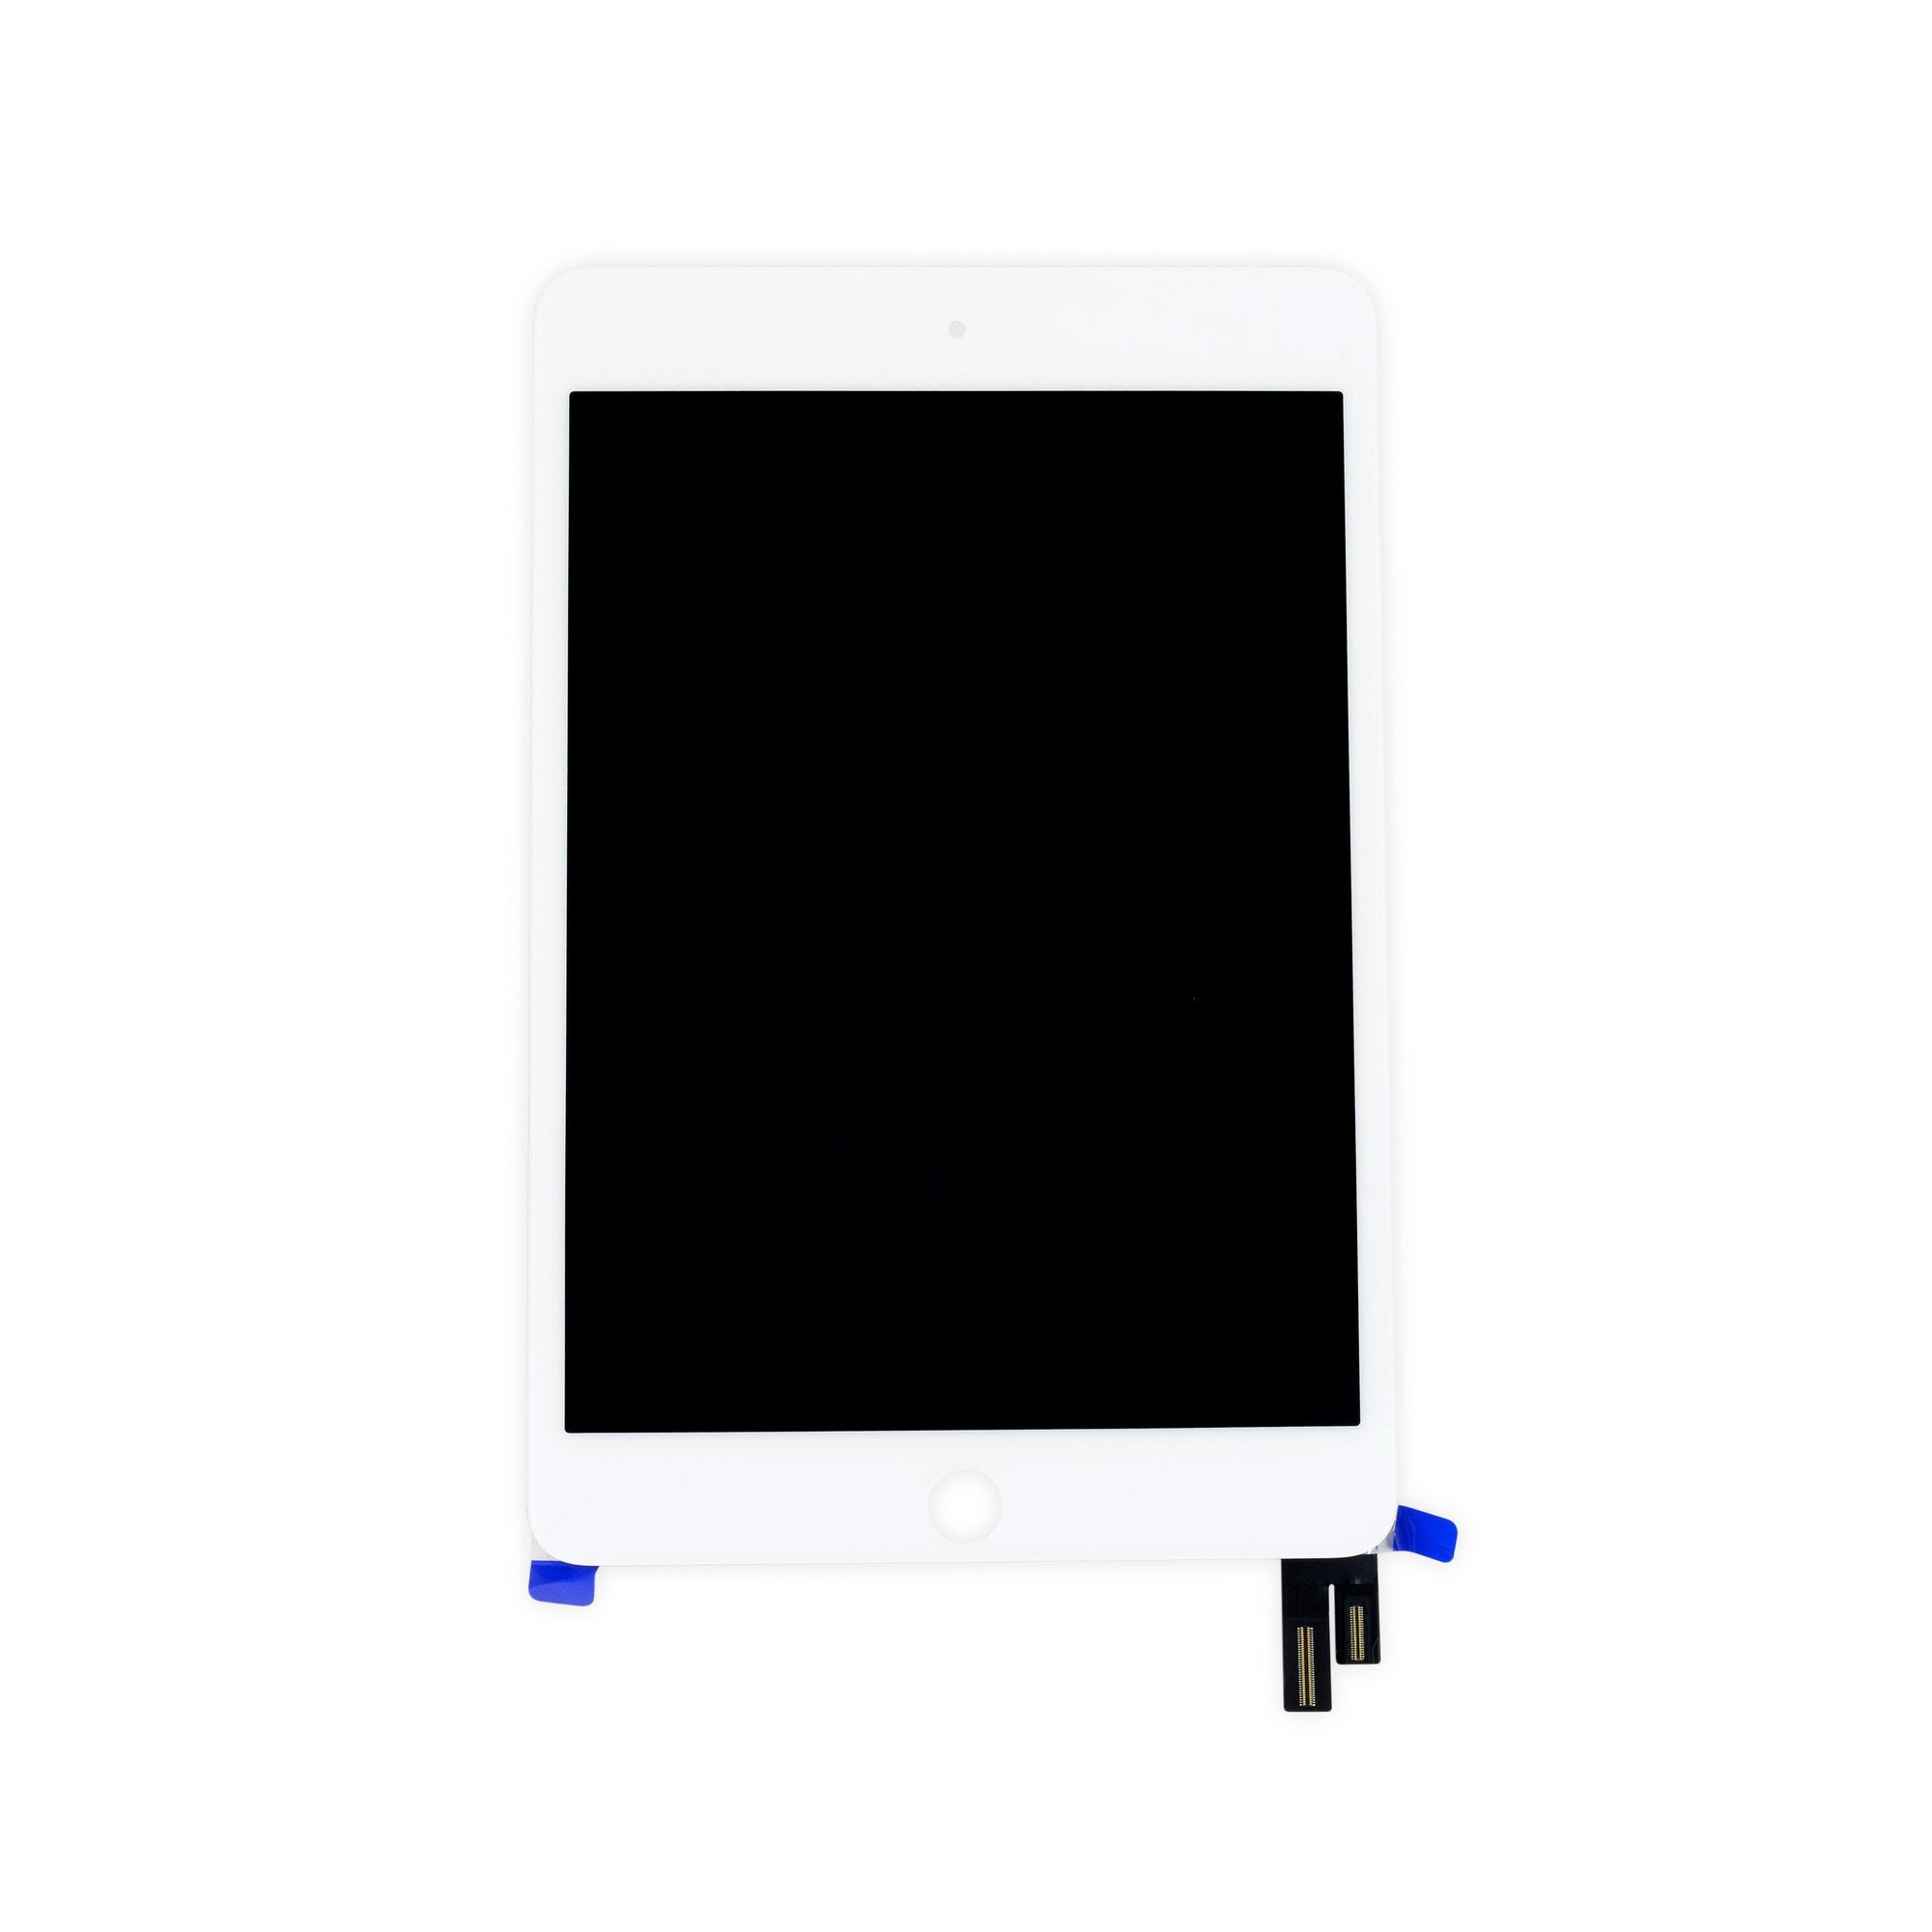 iPad mini 4 LTE Screen and Digitizer Replacement - iFixit Repair Guide